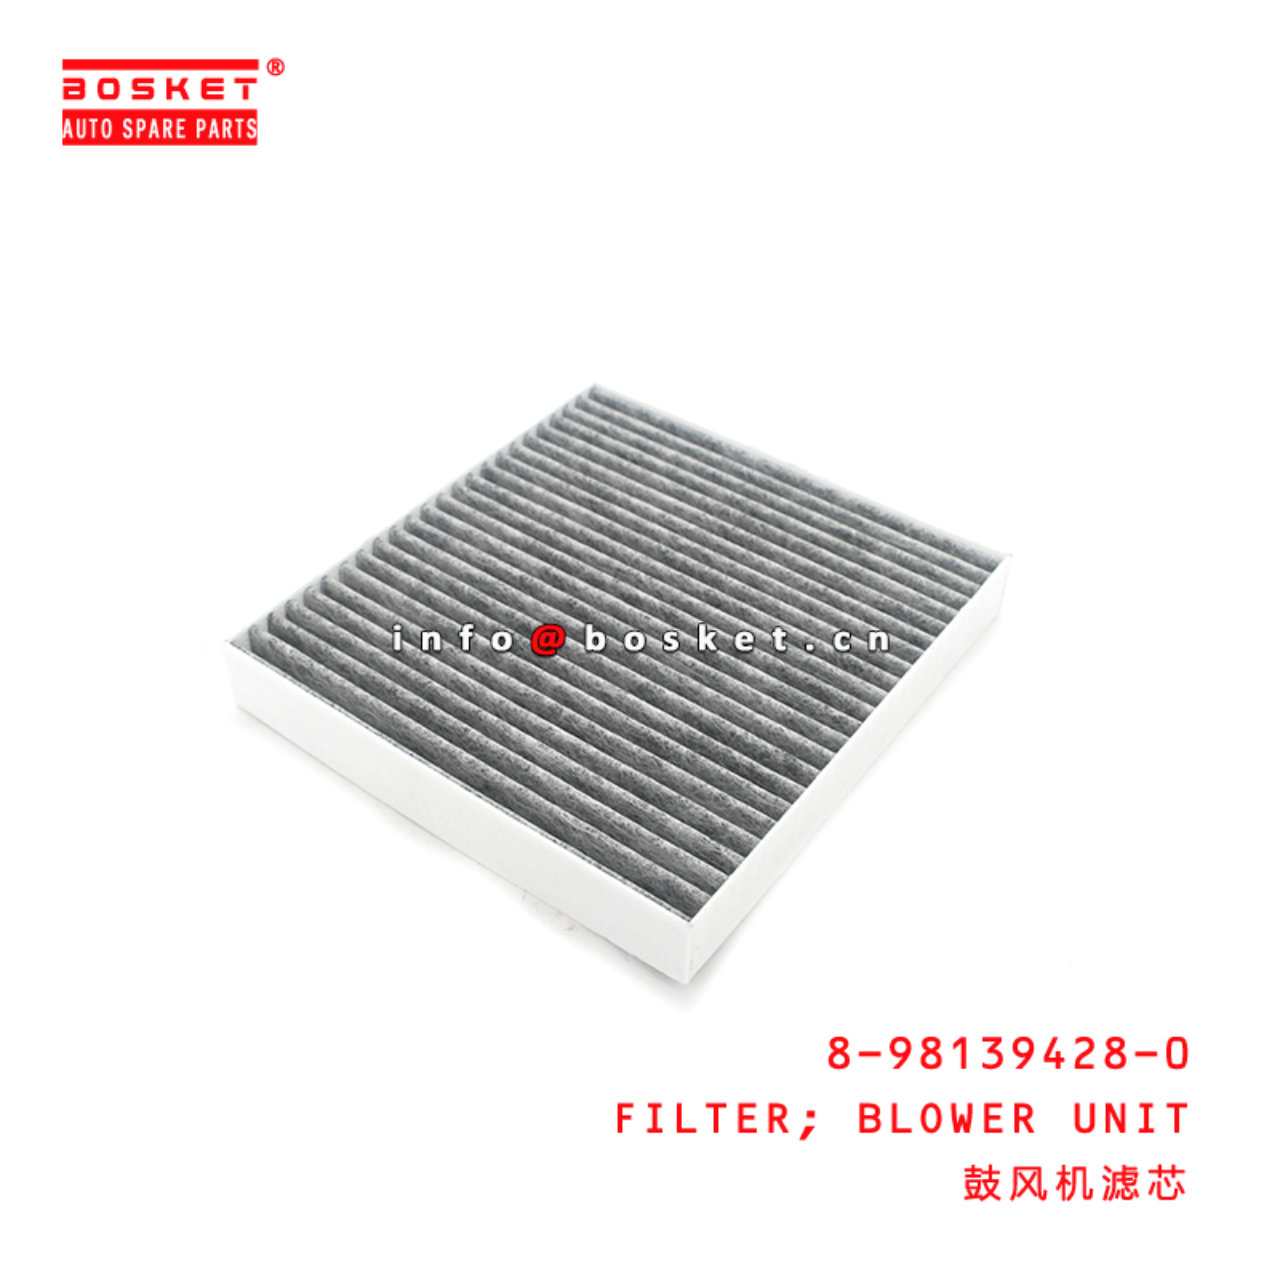  8-98139428-0 Blower Unit Filter 8981394280 Suitable for ISUZU TFR